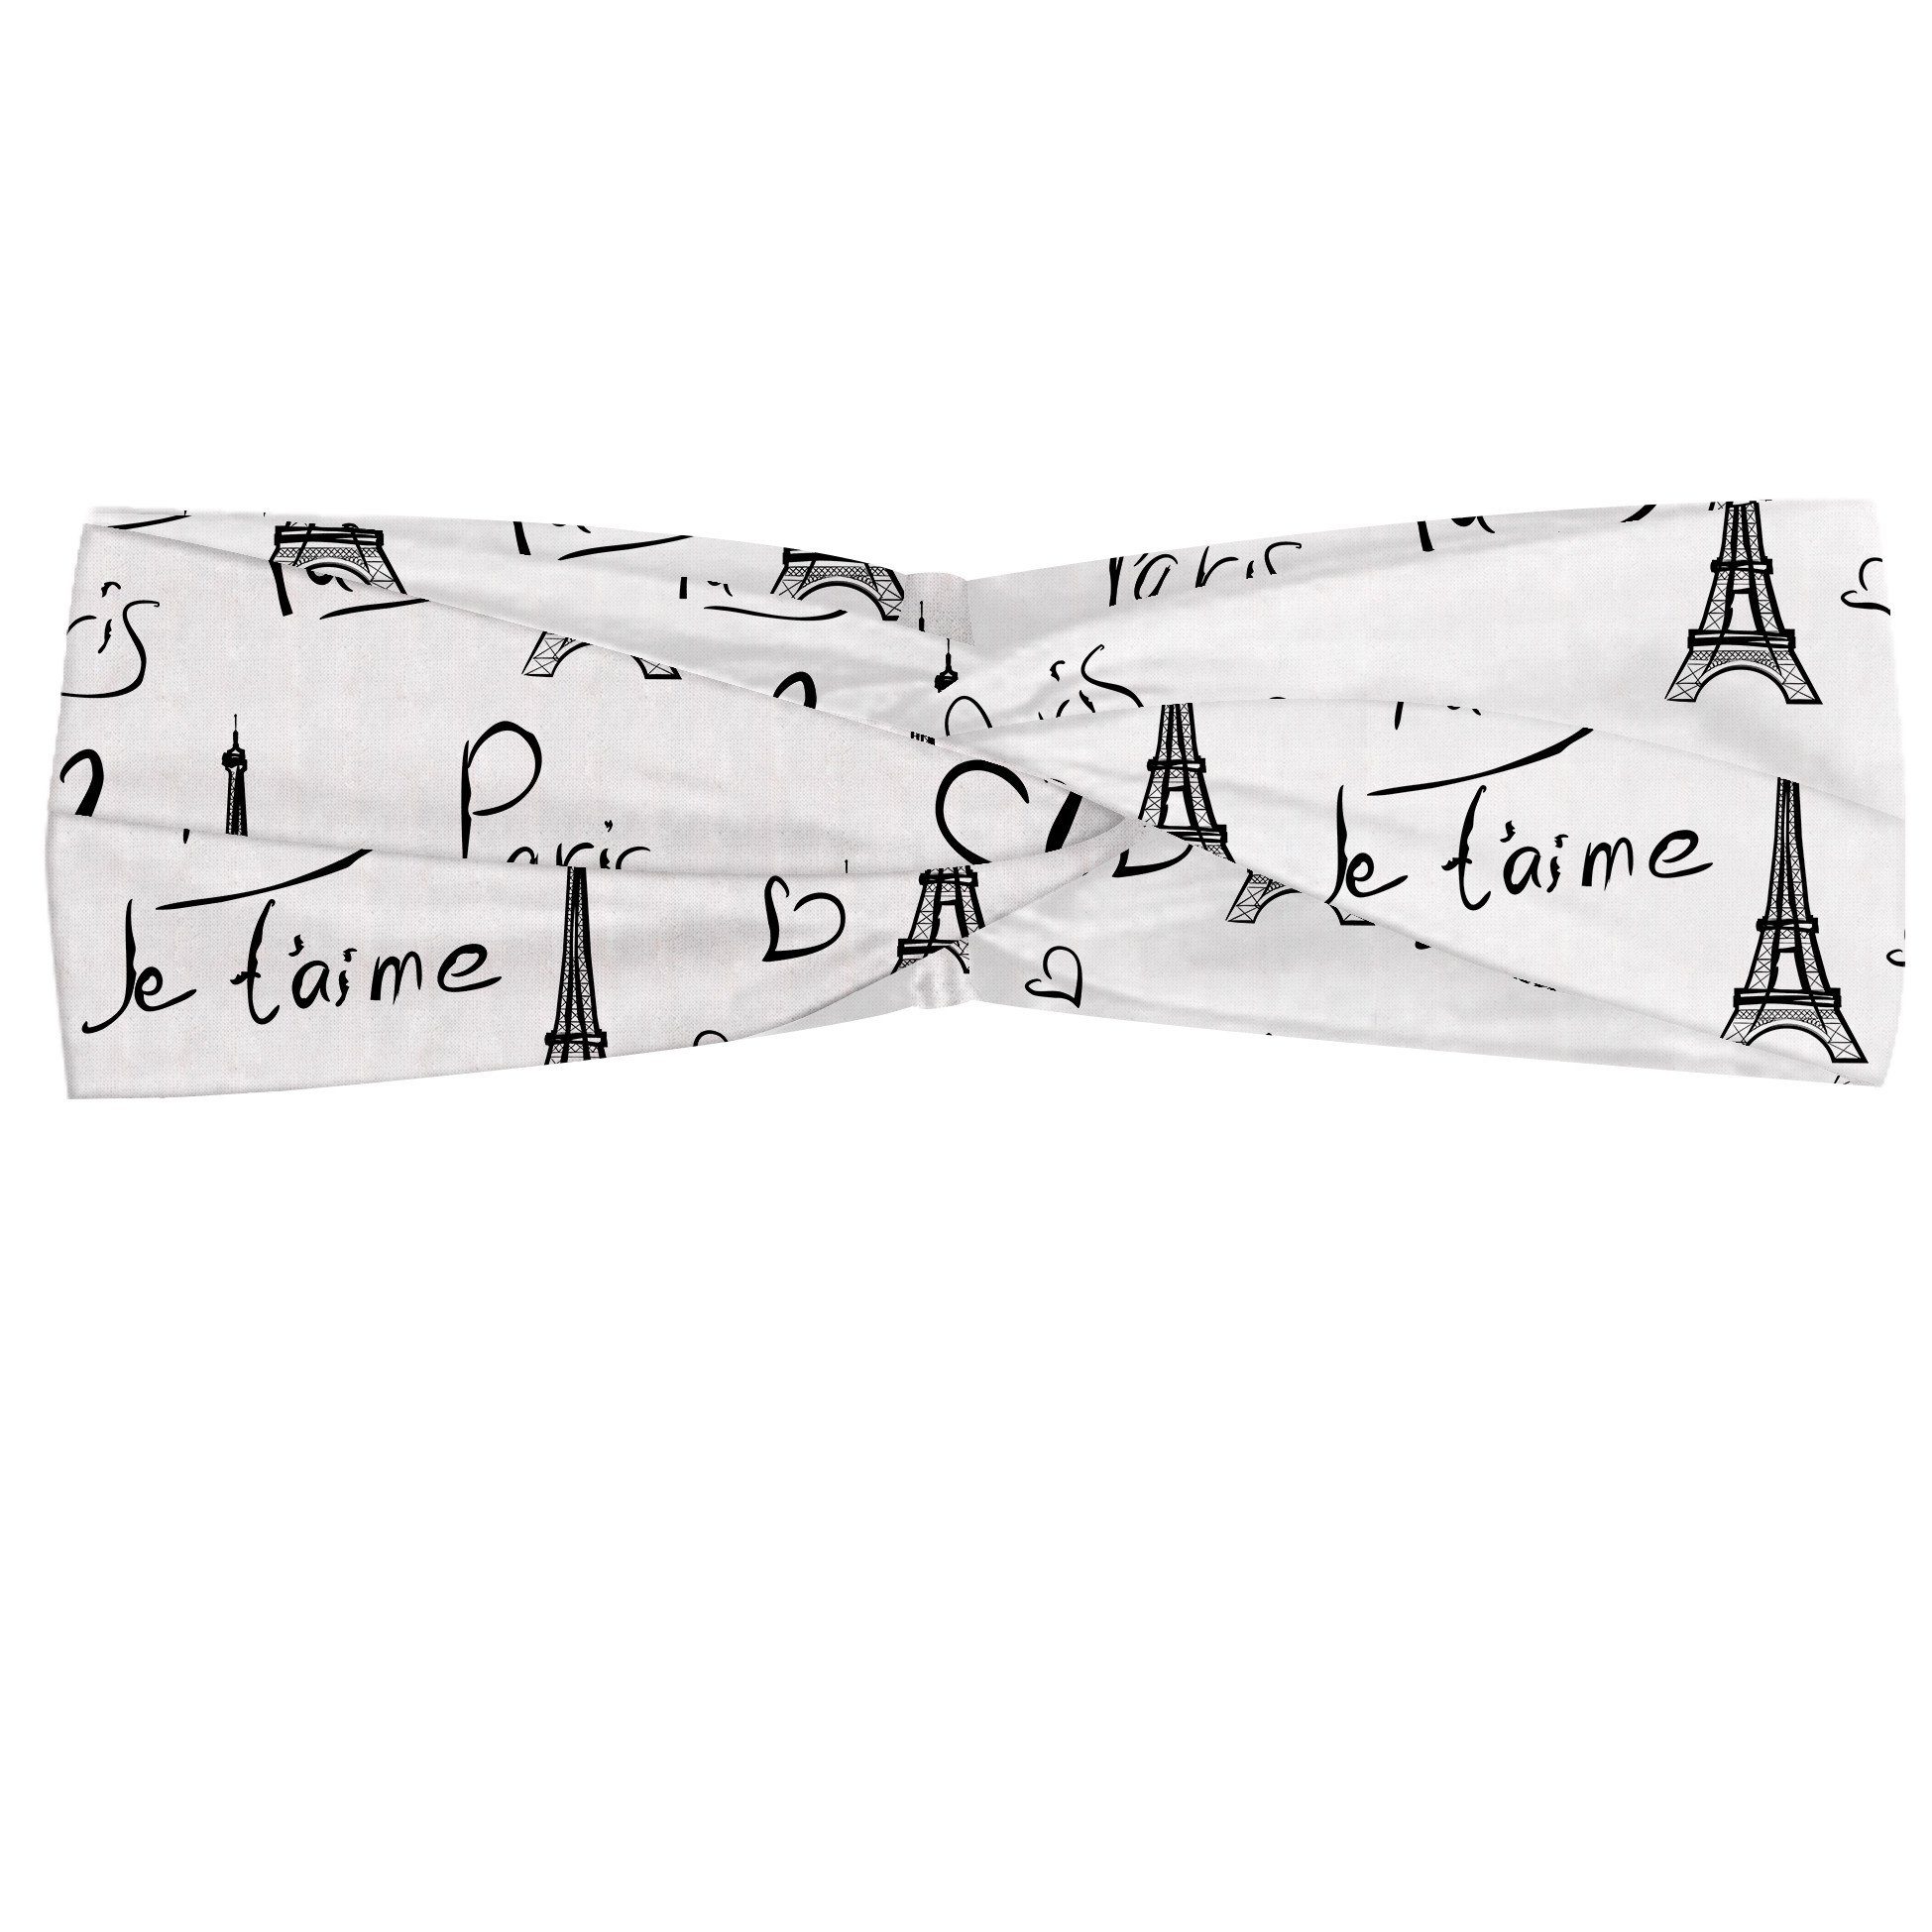 Abakuhaus Stirnband Elastisch und Angenehme Paris Je alltags accessories Eiffel T'aime Doodle